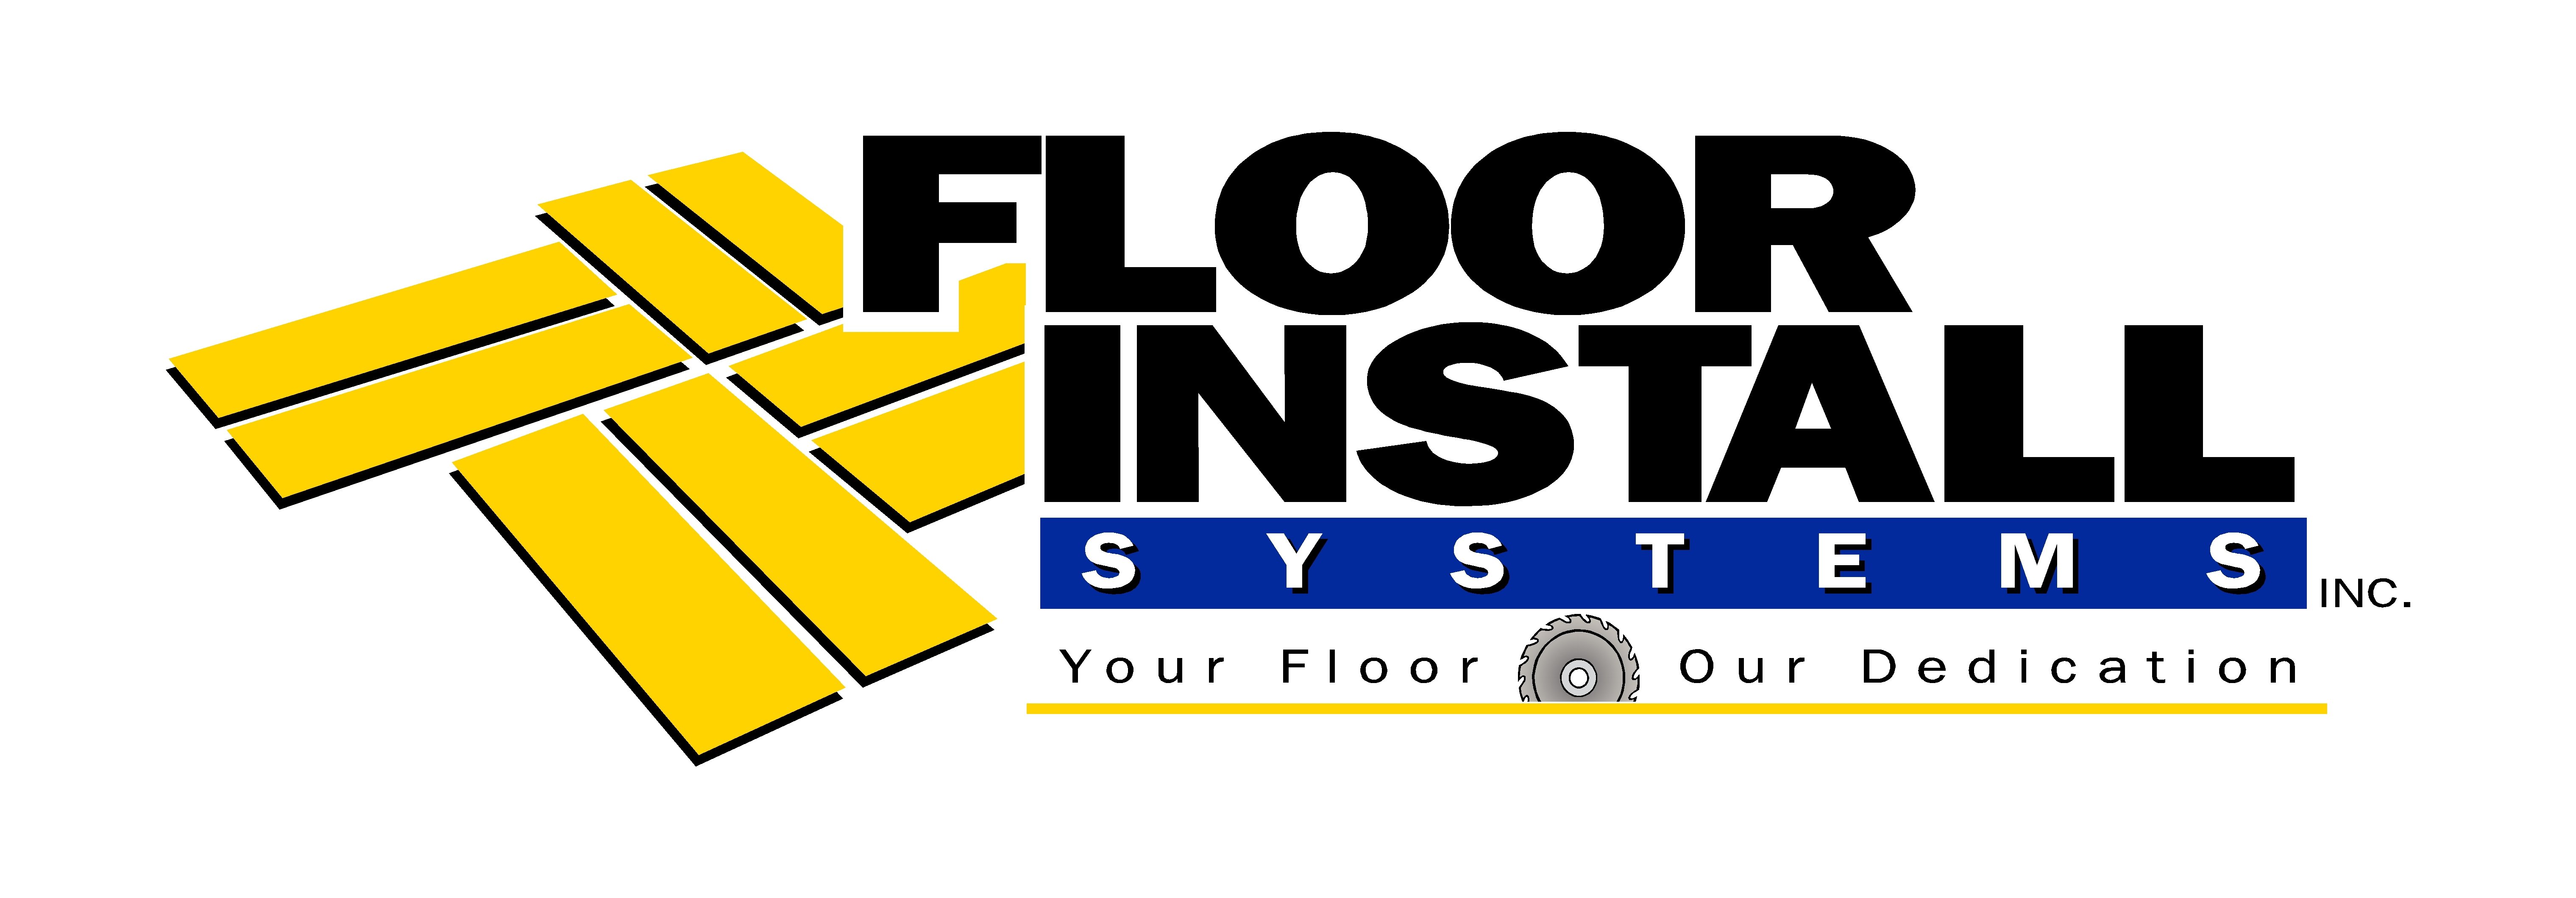 Floor Install Systems, Inc. Logo